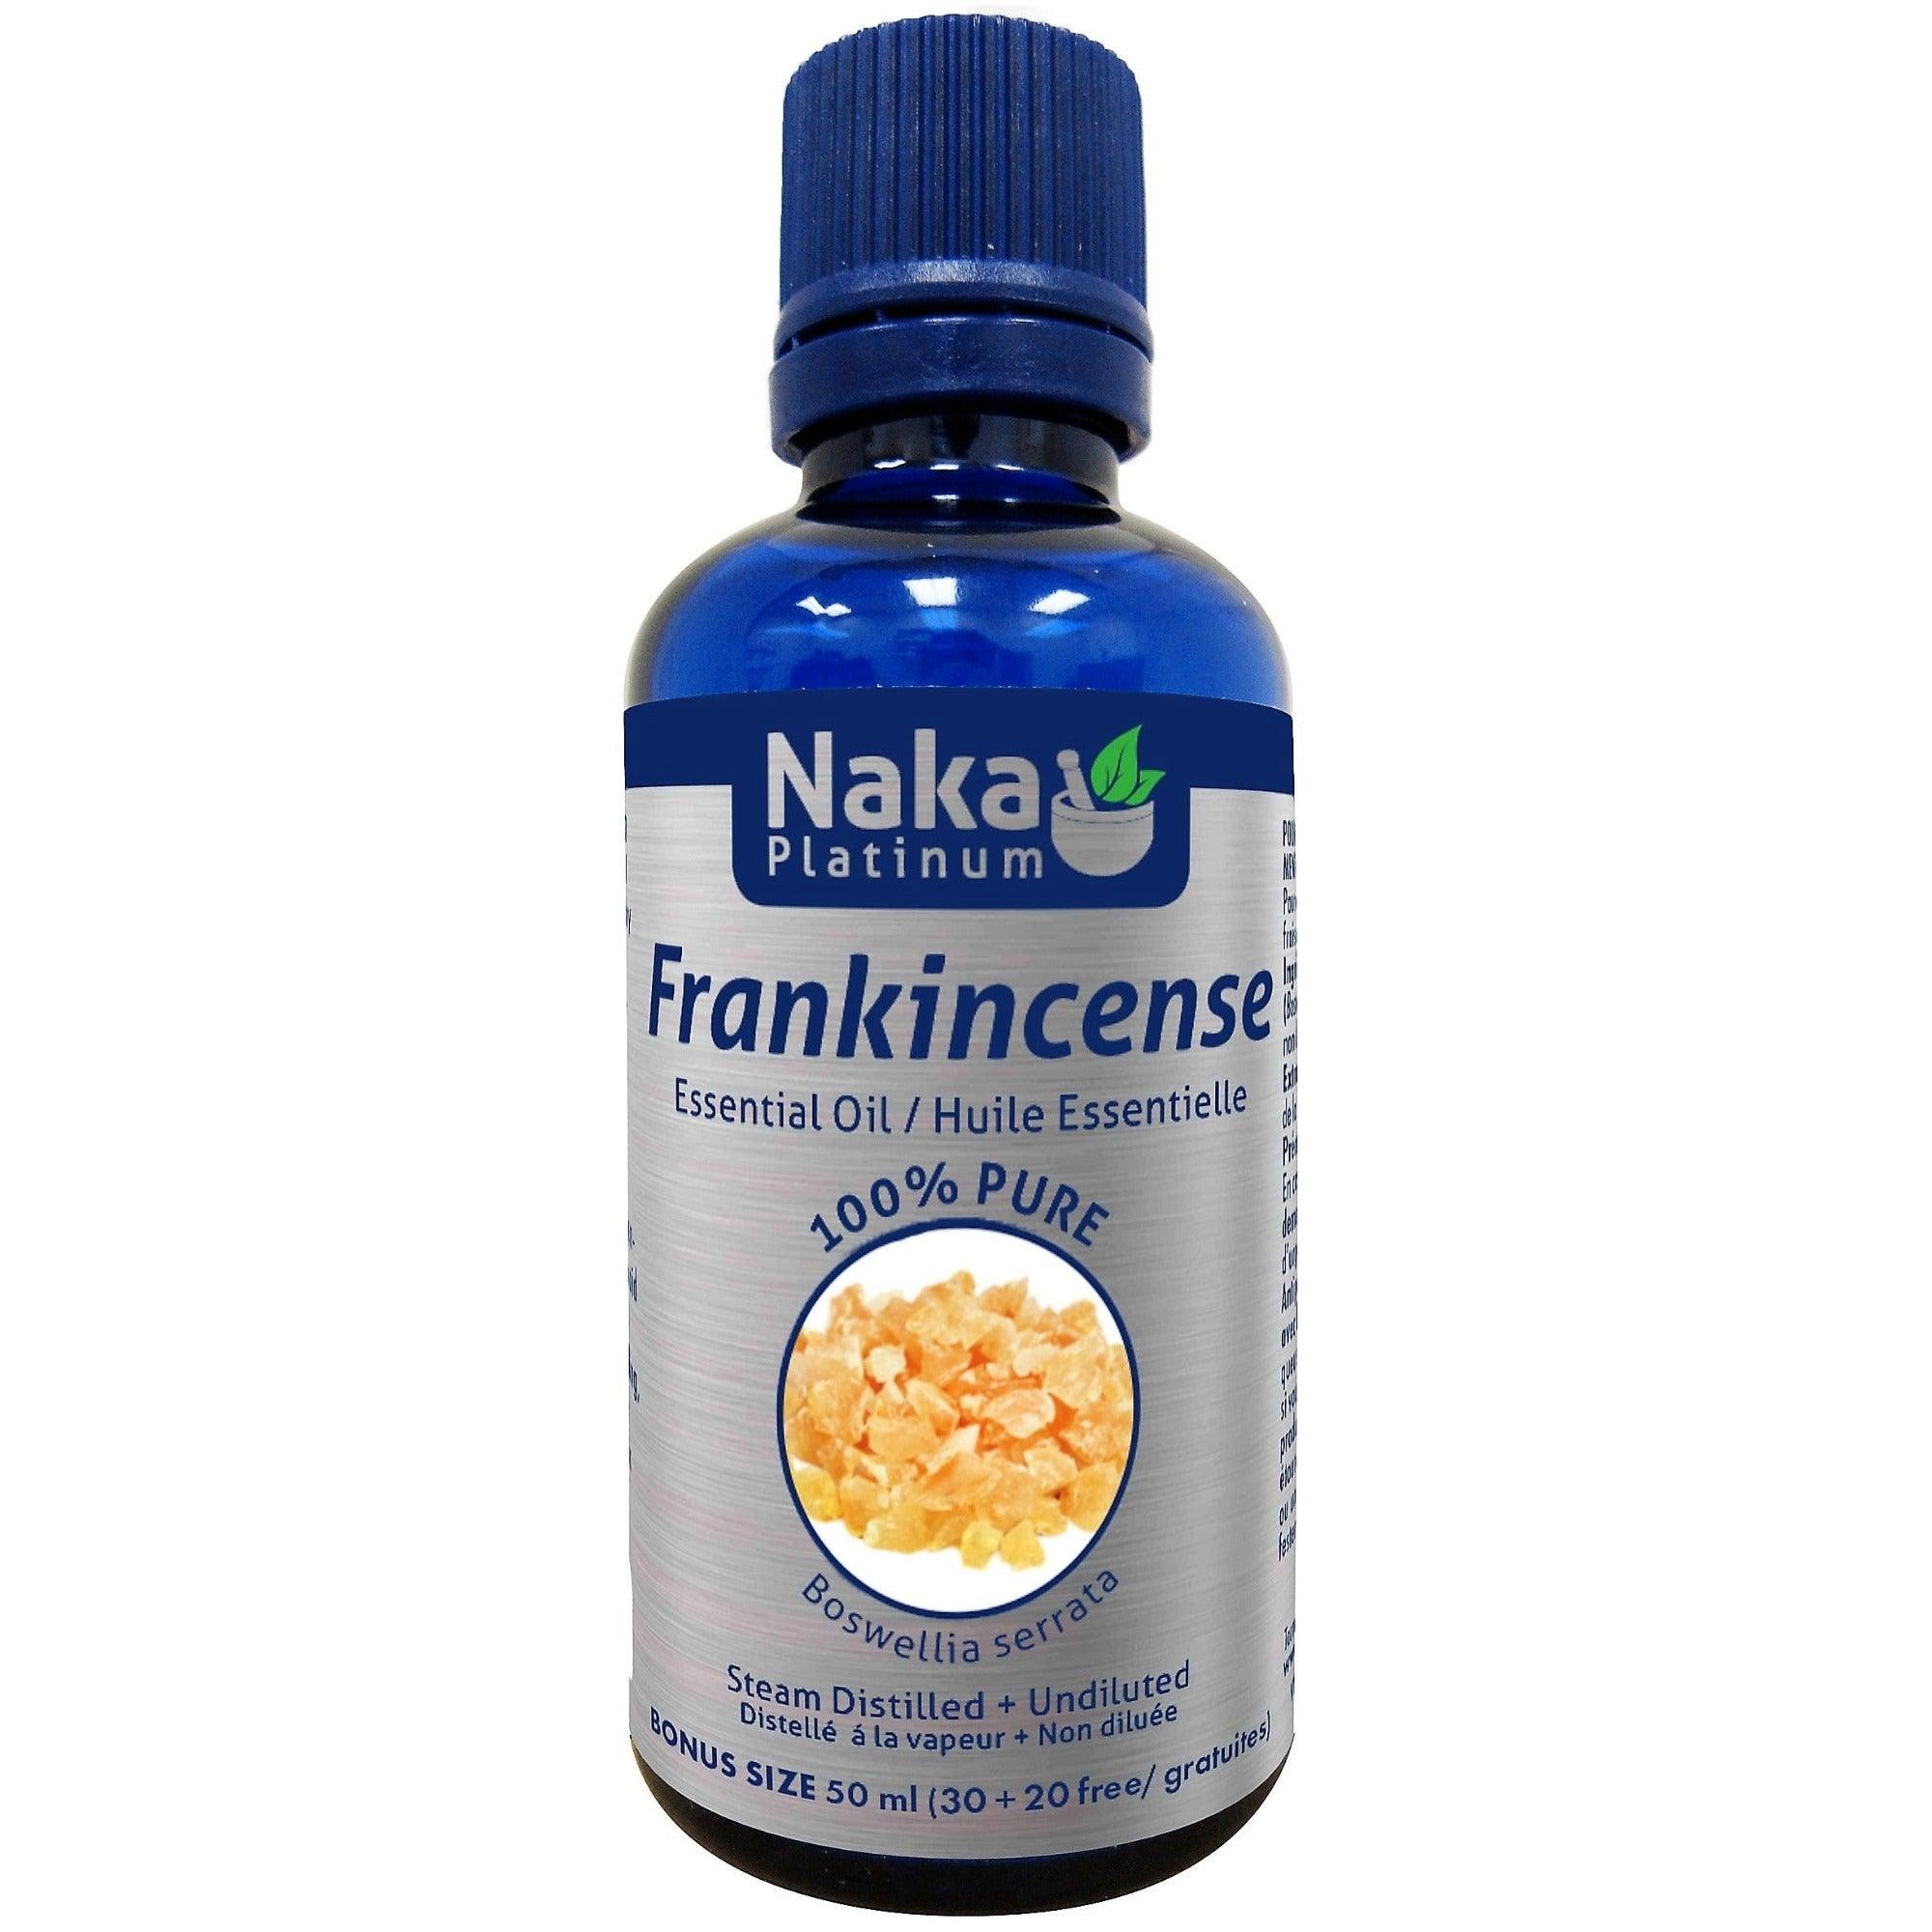 Naka Platinum Frankincense Essential Oil 50ml Essential Oils at Village Vitamin Store